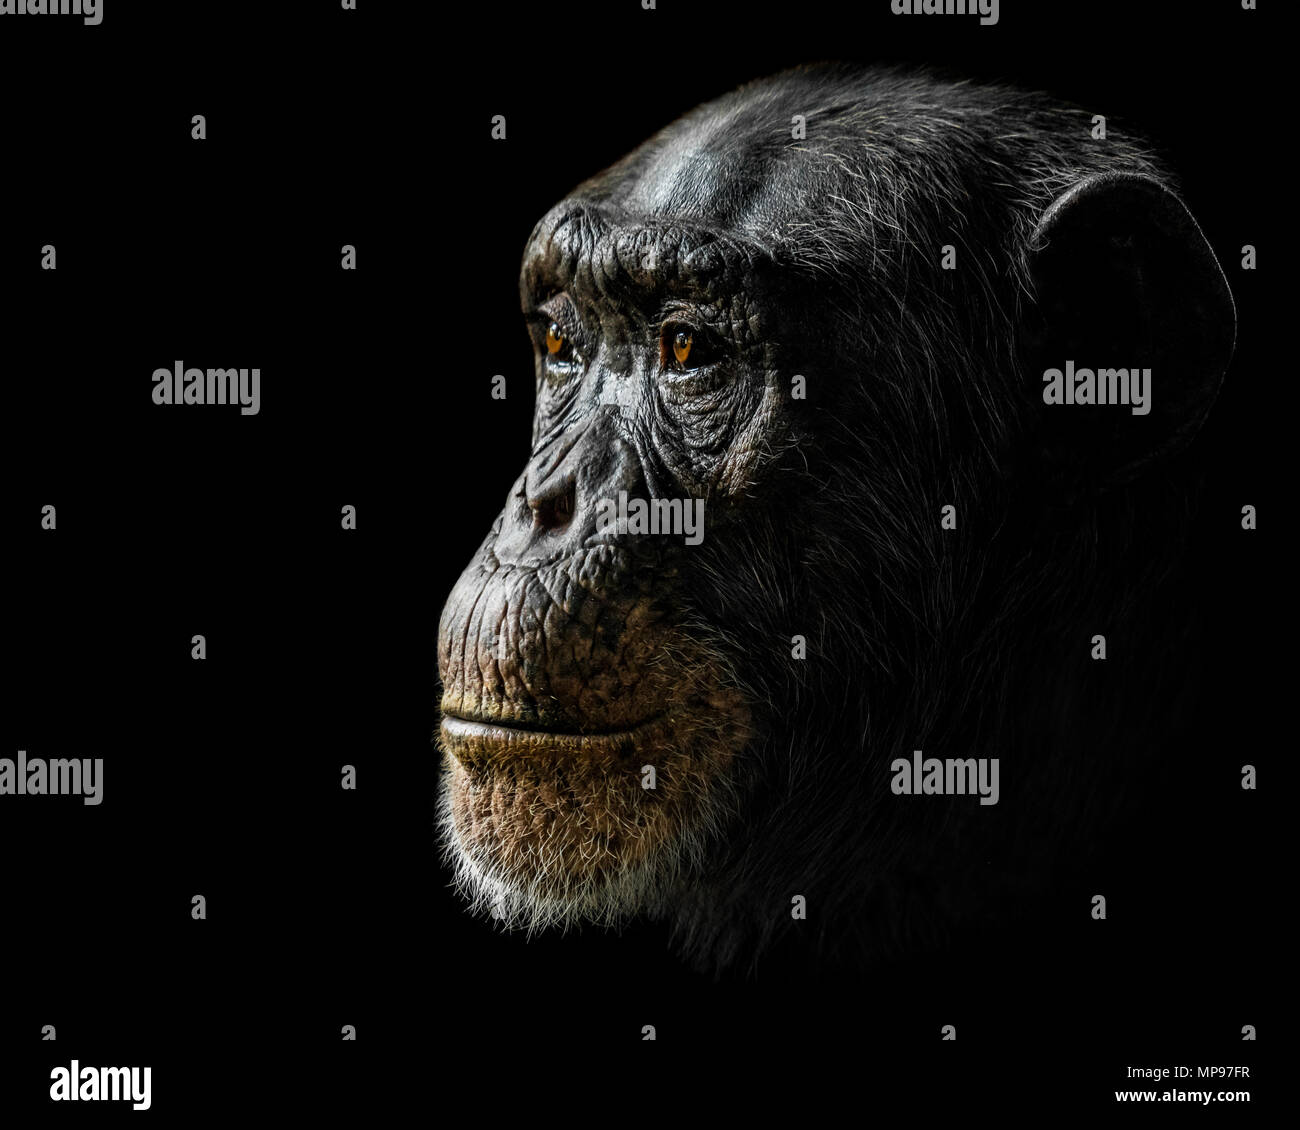 Profile Portrait of a Chimpanzee Against a Black Background Stock Photo